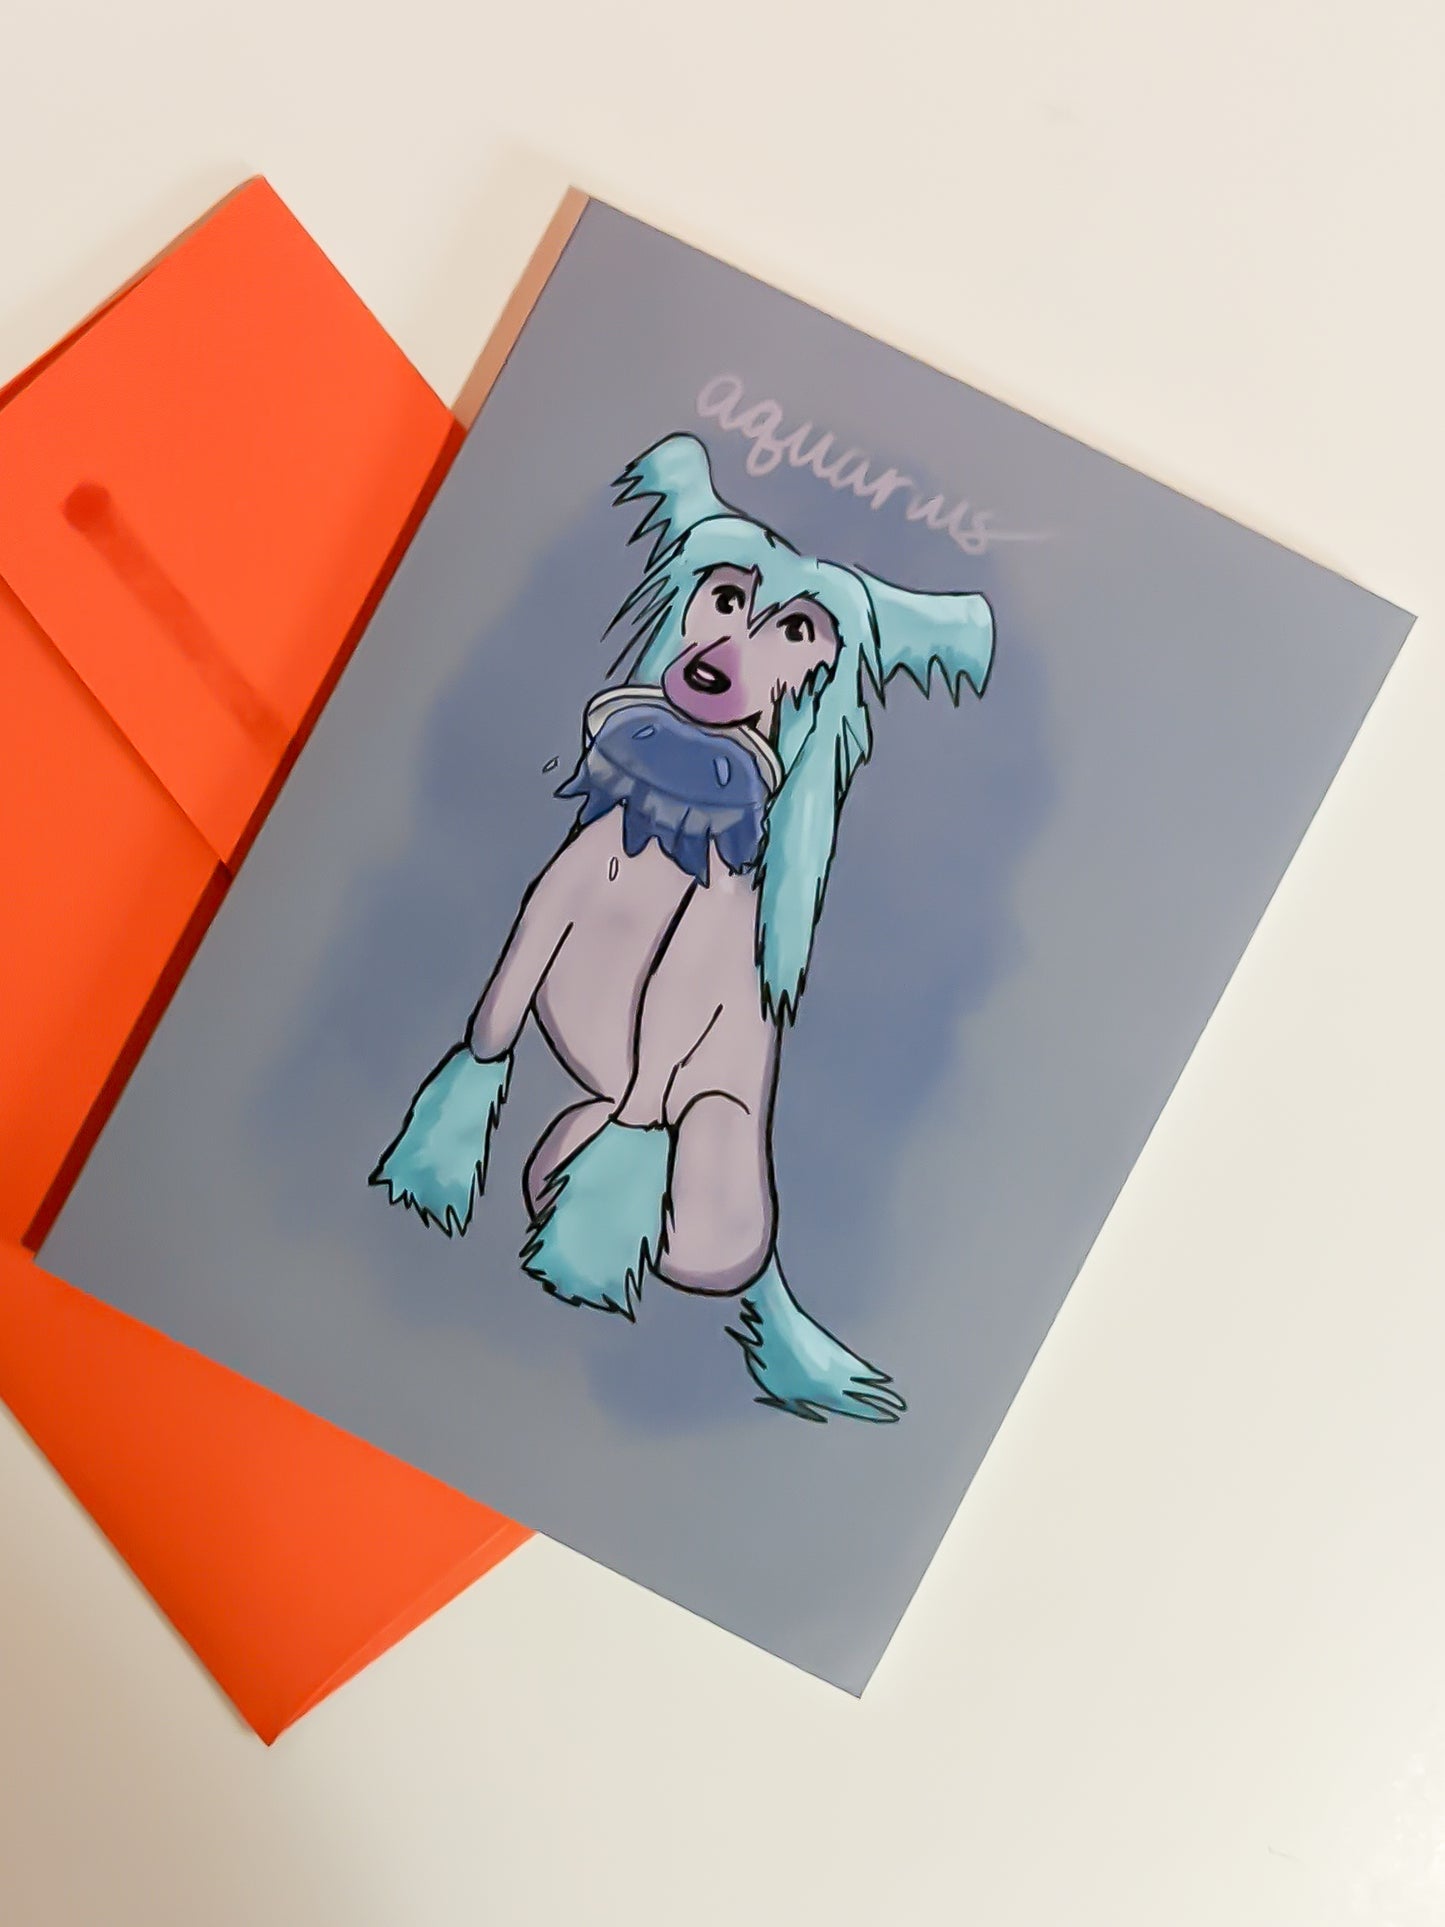 Aquarius Dog Greeting Card